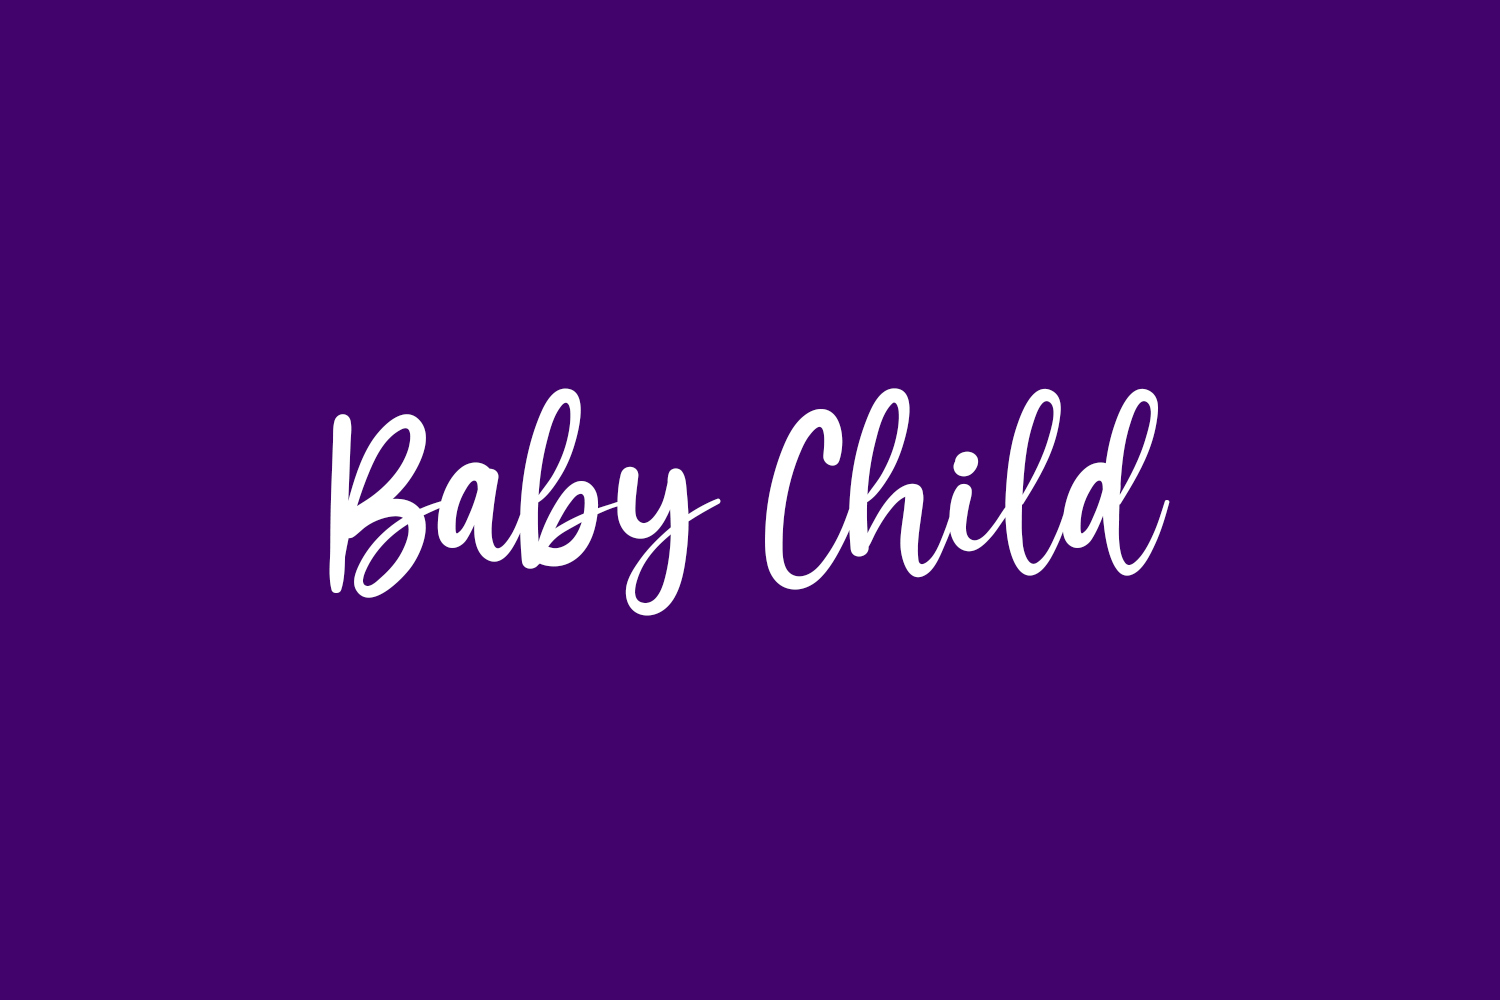 Baby Child Free Font